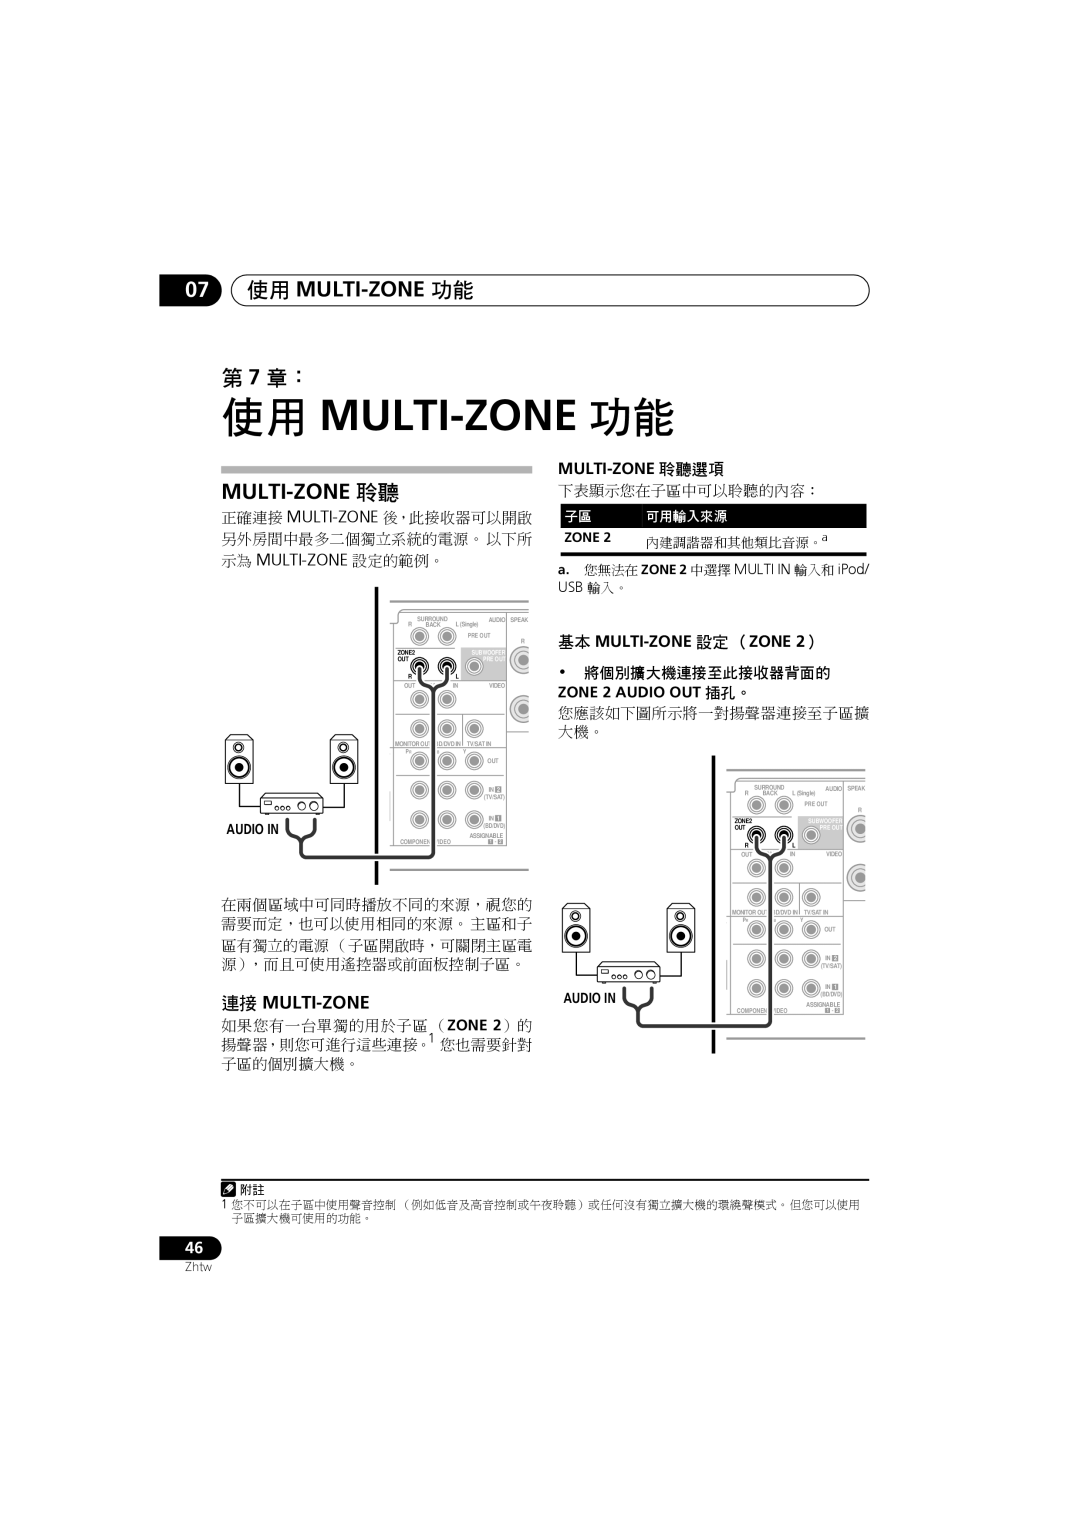 Pioneer VSX-819H-S 使用 Multi-Zone 功能, 07使用 MULTI-ZONE 功能, 第 7 章：, 連接 Multi-Zone, Multi-Zone 聆聽選項, 下表顯示您在子區中可以聆聽的內容： 